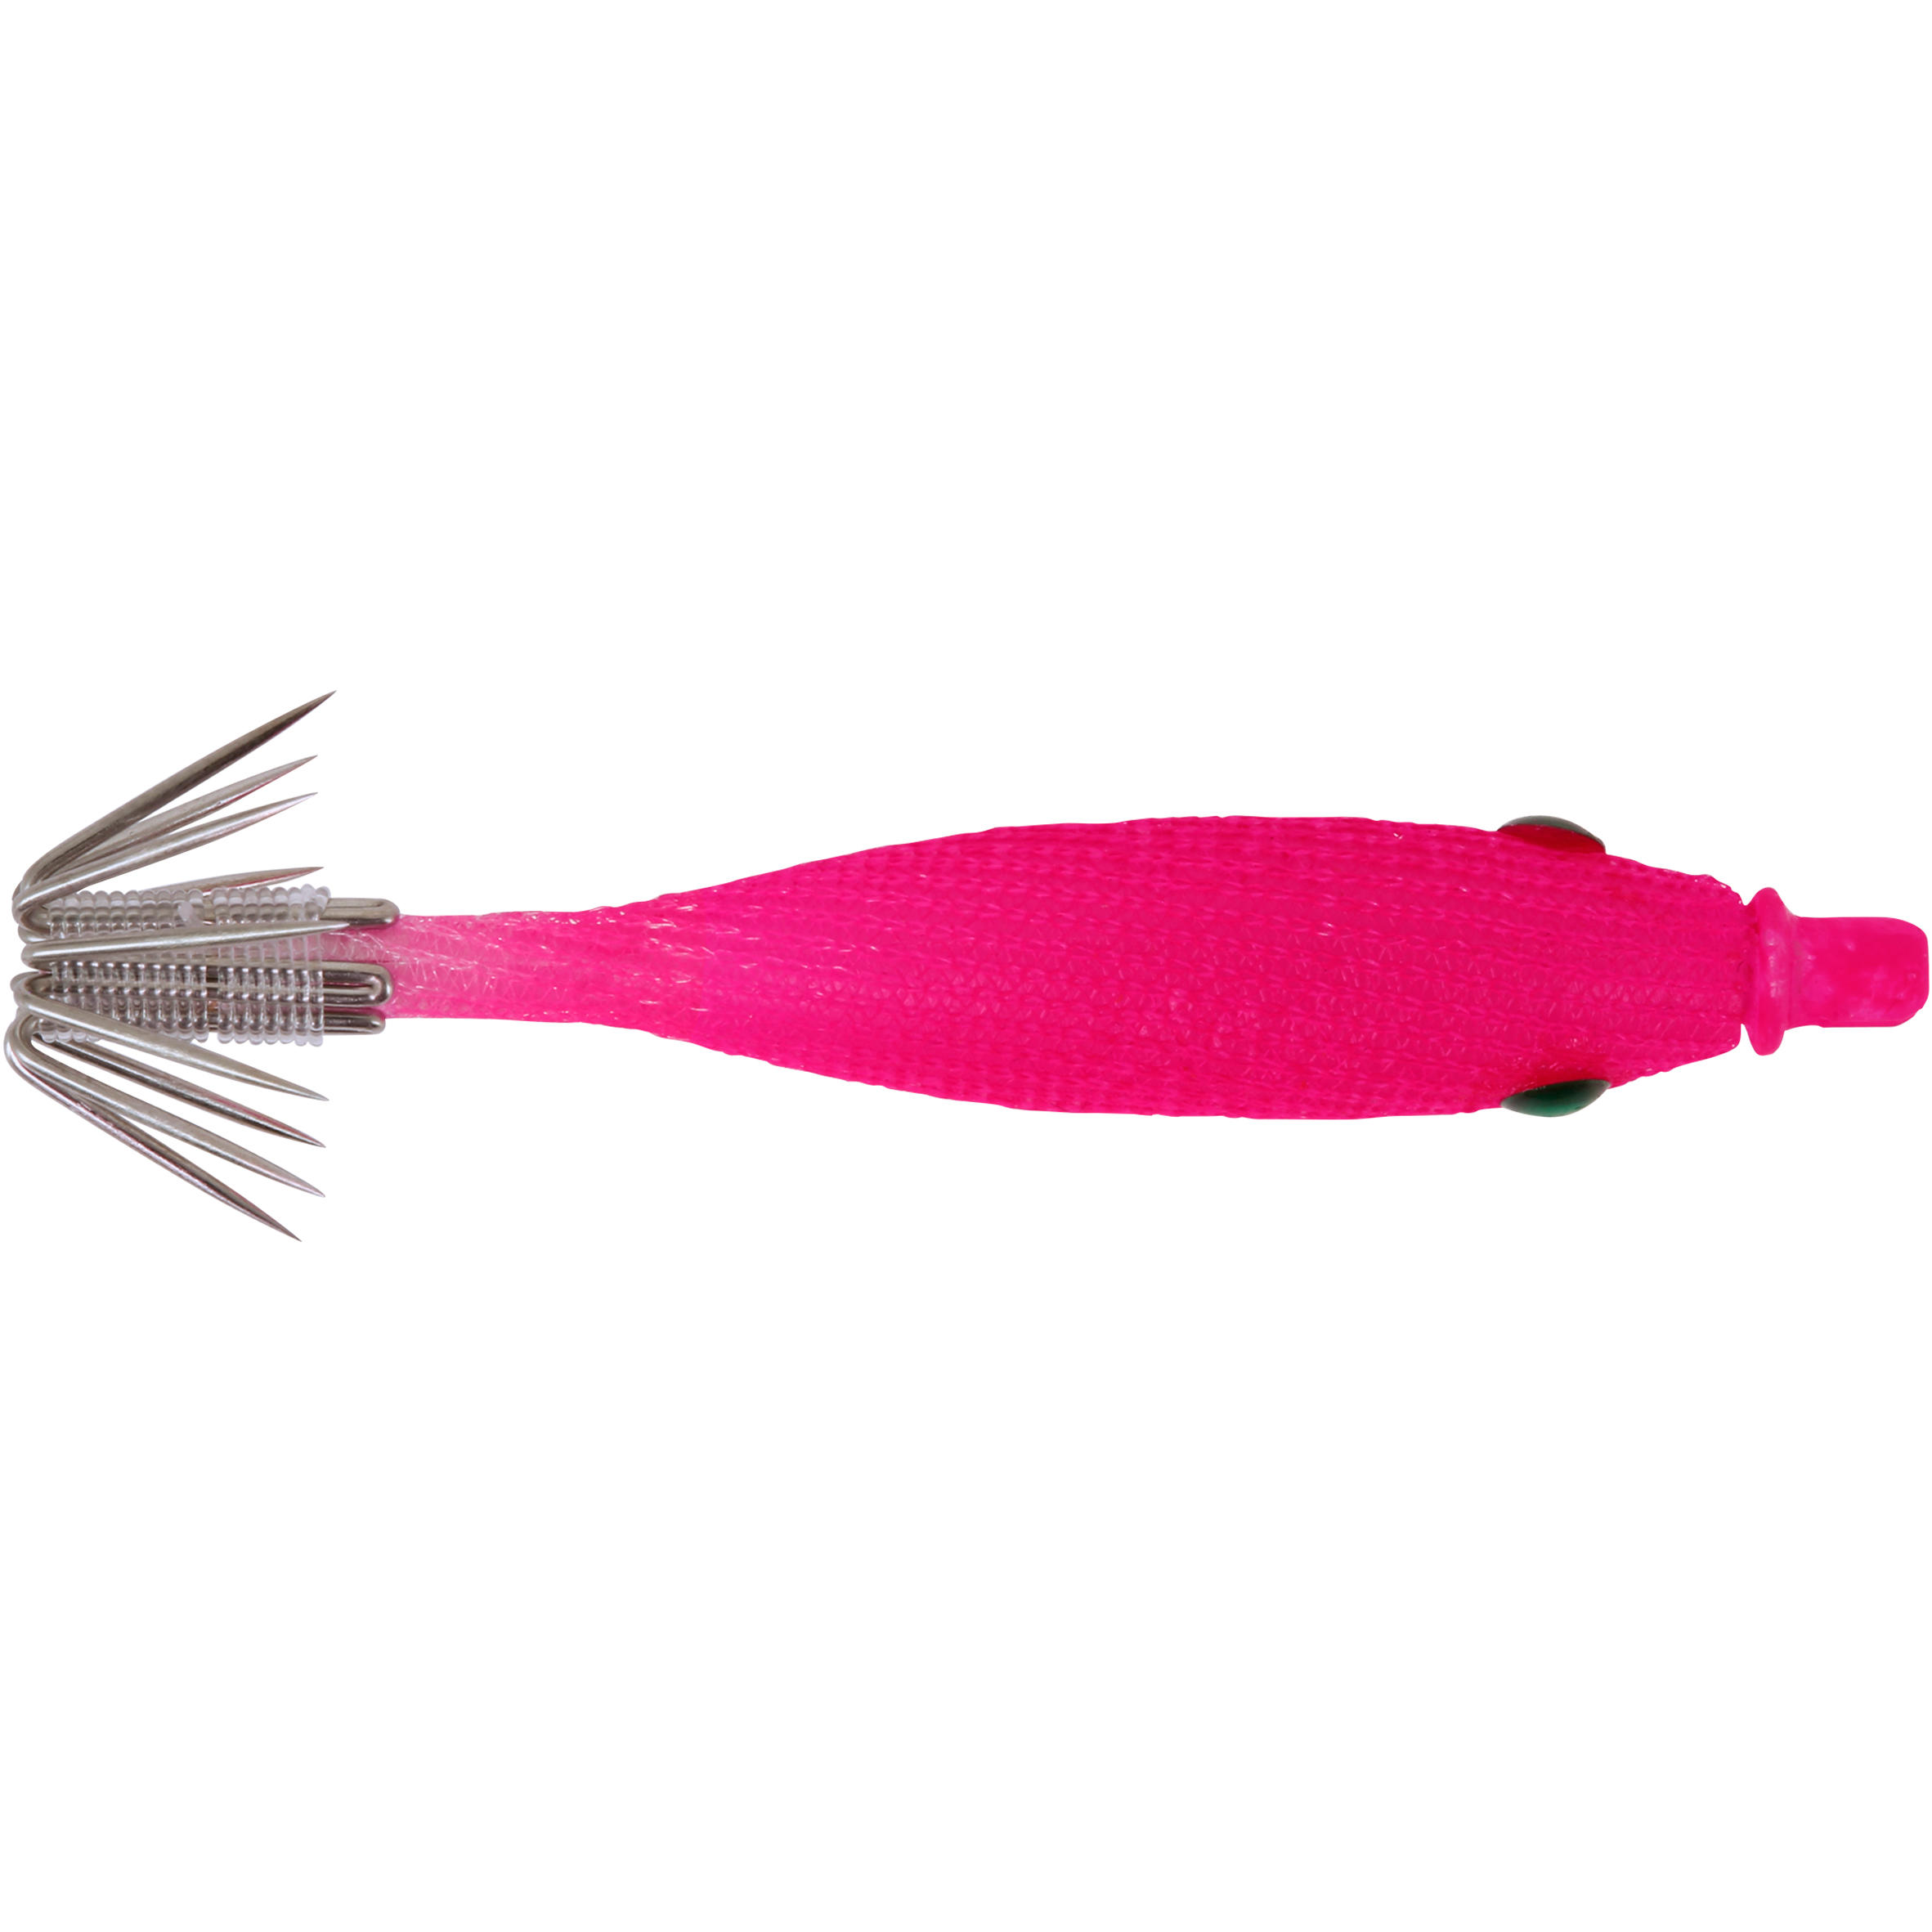 EBIKA soft 1.8 50 pink cuttlefish/squid fishing jig 5/10